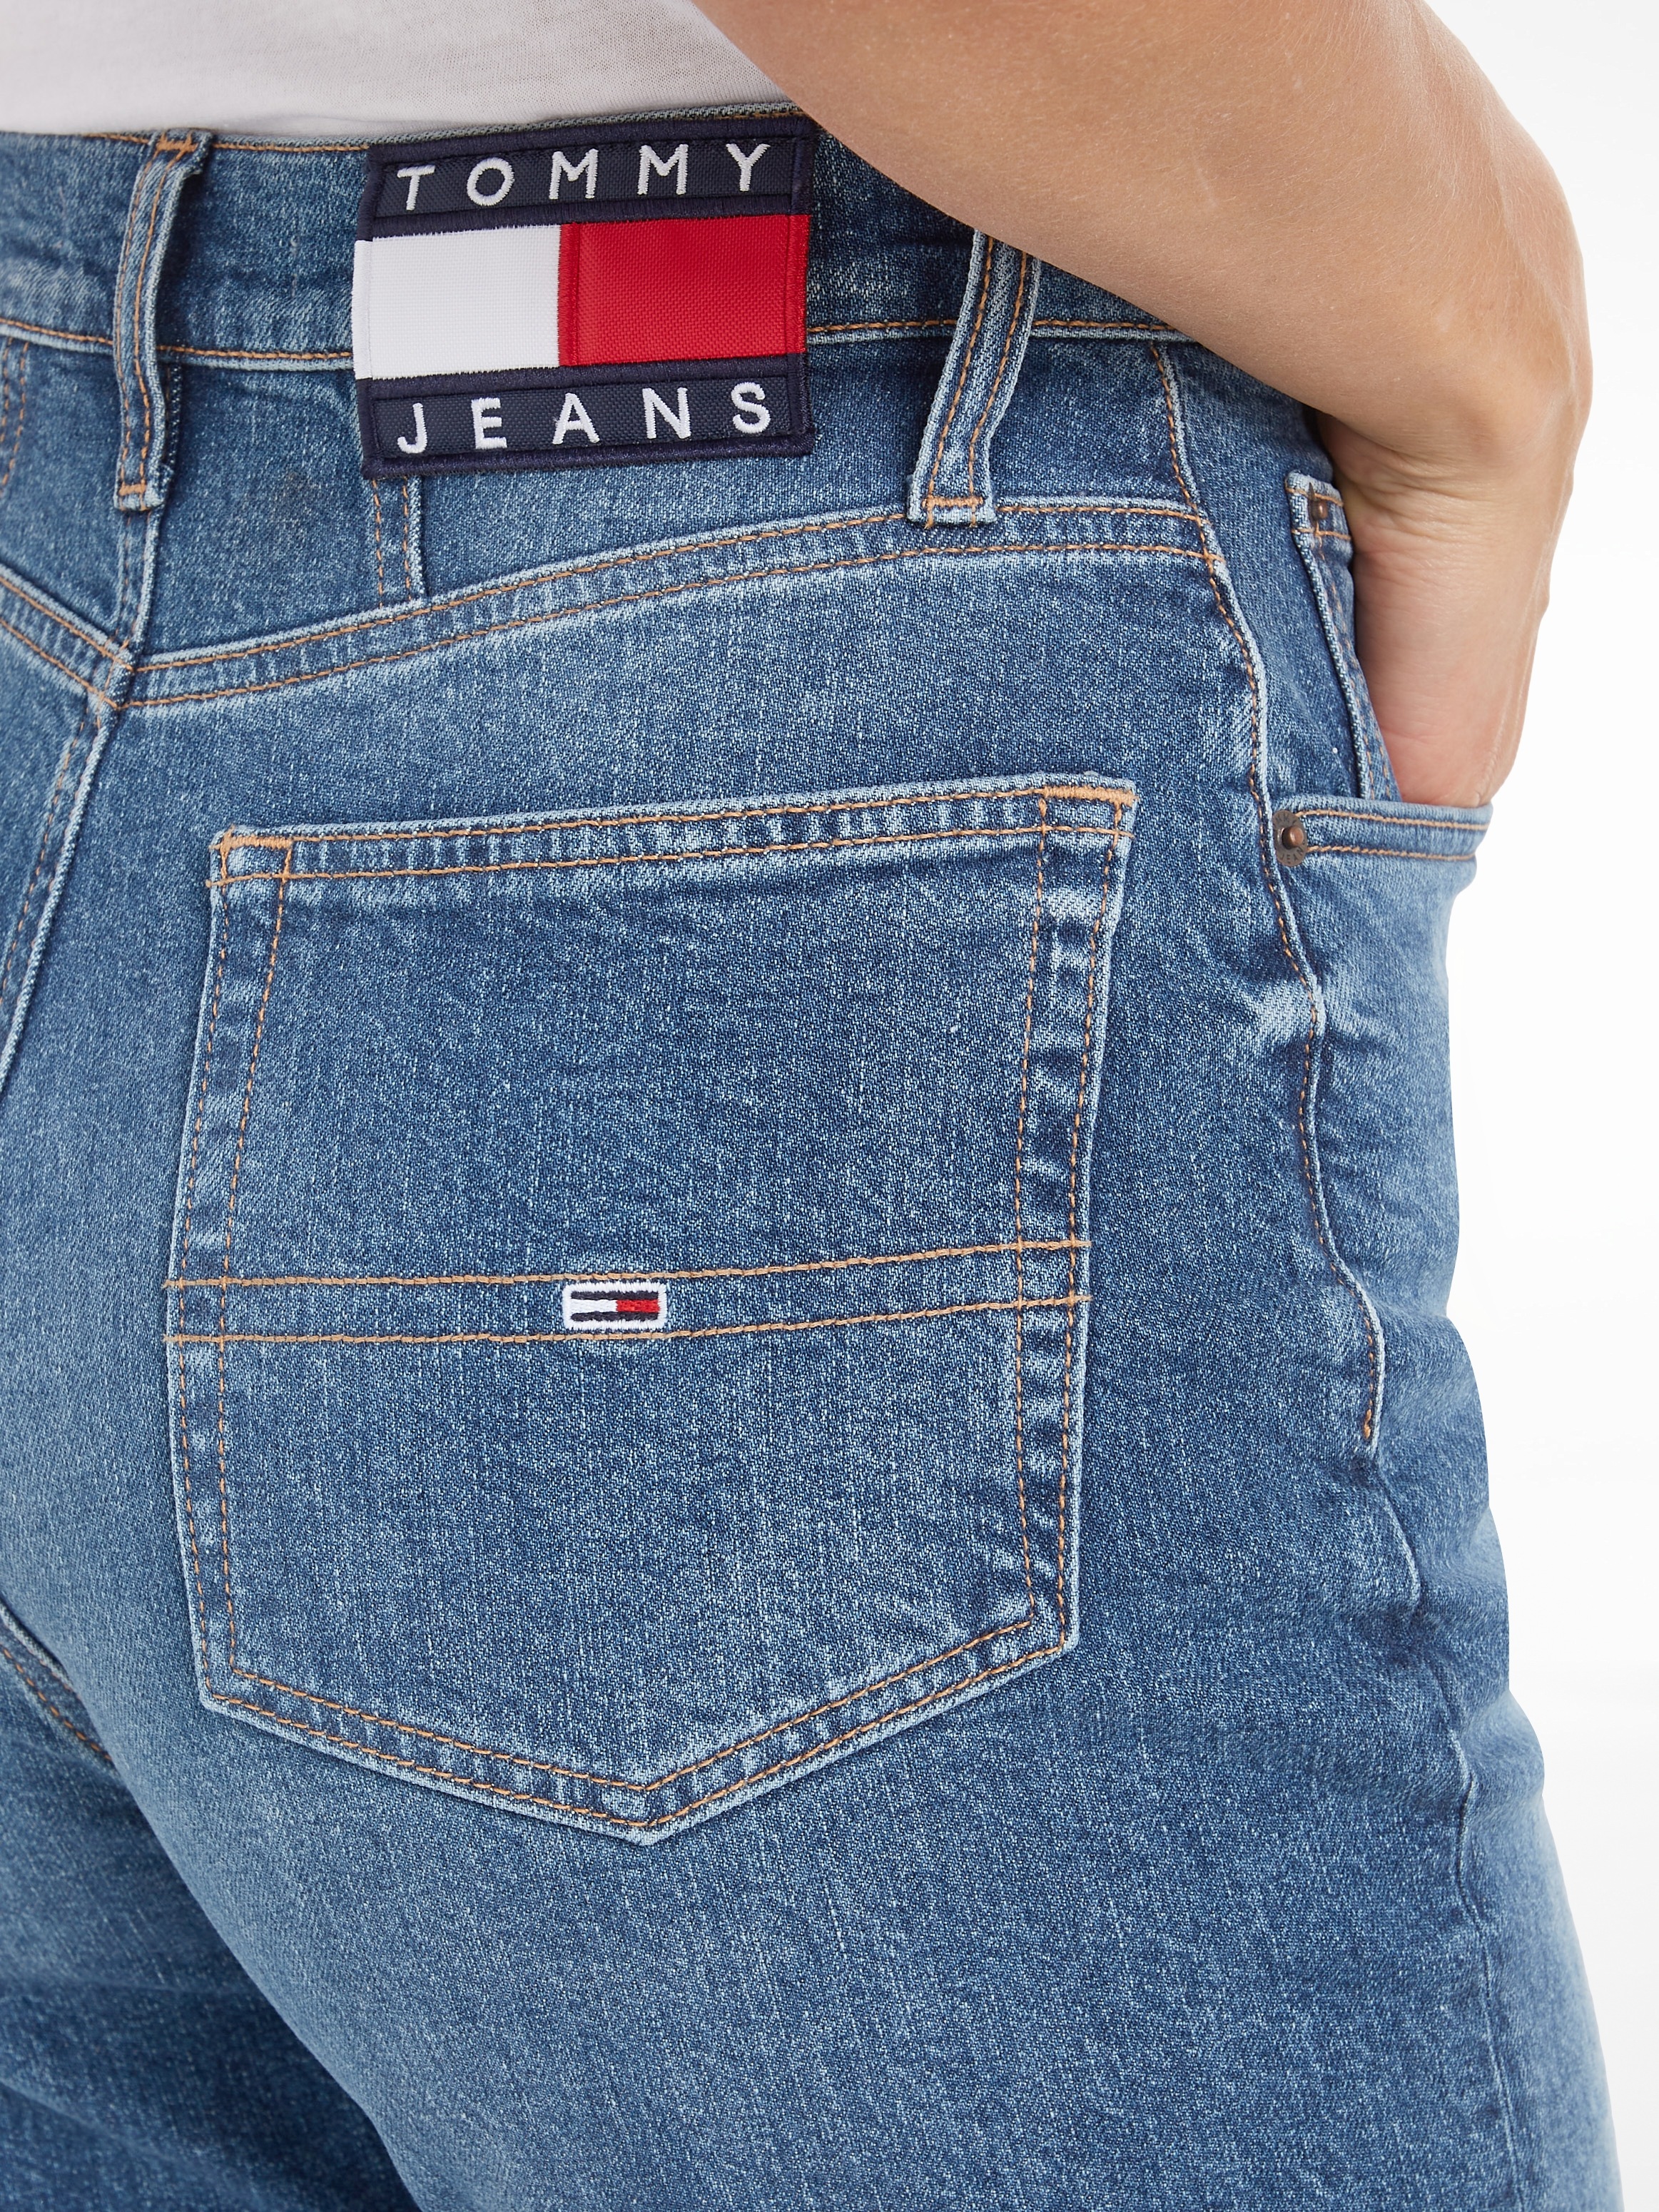 CG5136«, im Mom-Jeans Online Jeans Logobadge JEAN »MOM OTTO Tommy Shop UHR mit Labelflags und TPR